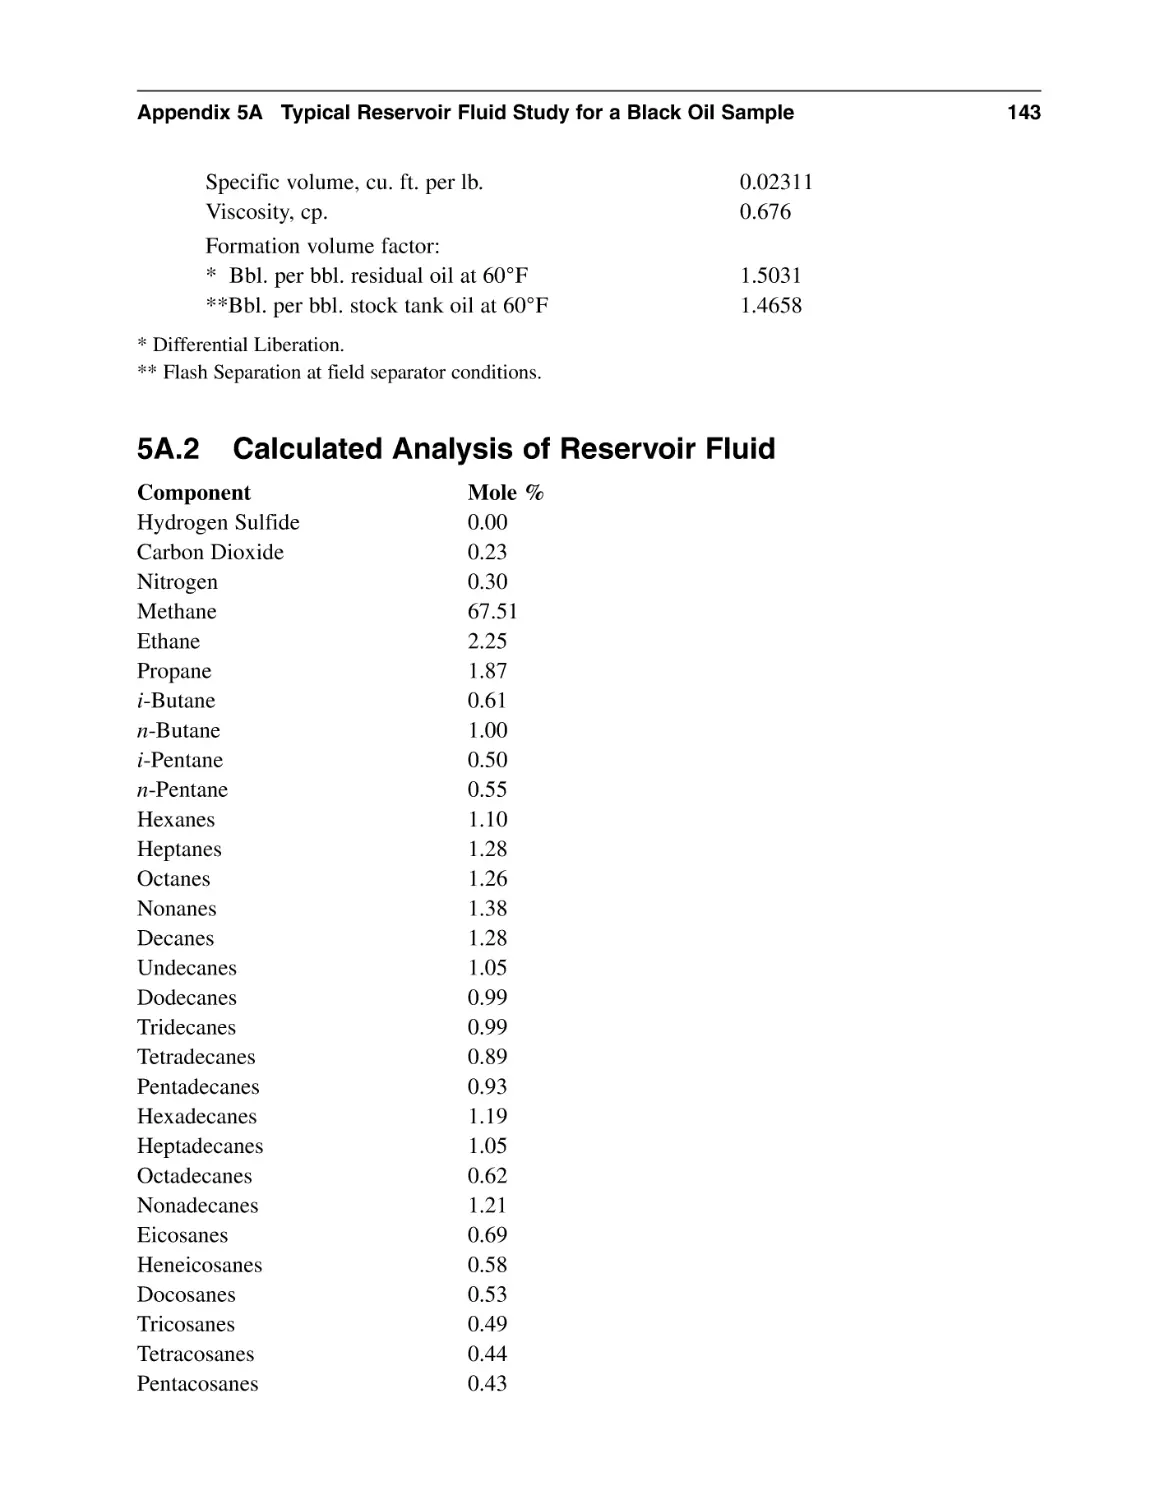 5A.2 Calculated Analysis of Reservoir Fluid